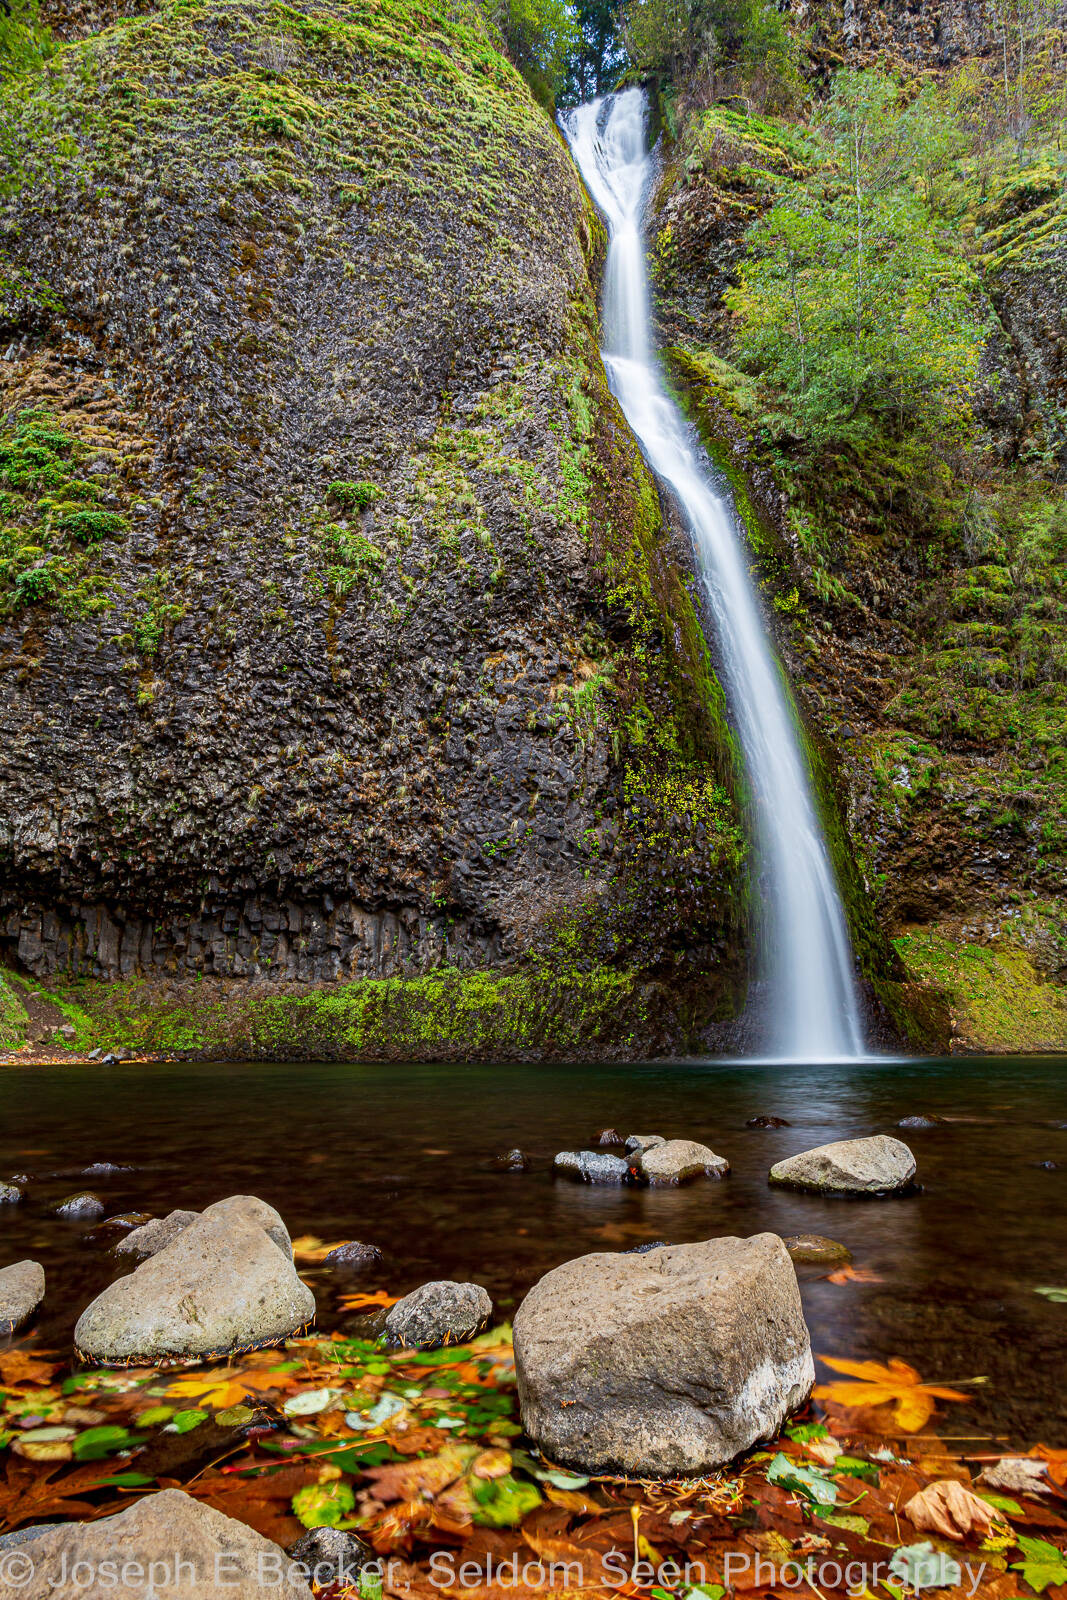 Image of Horsetail Falls by Joe Becker